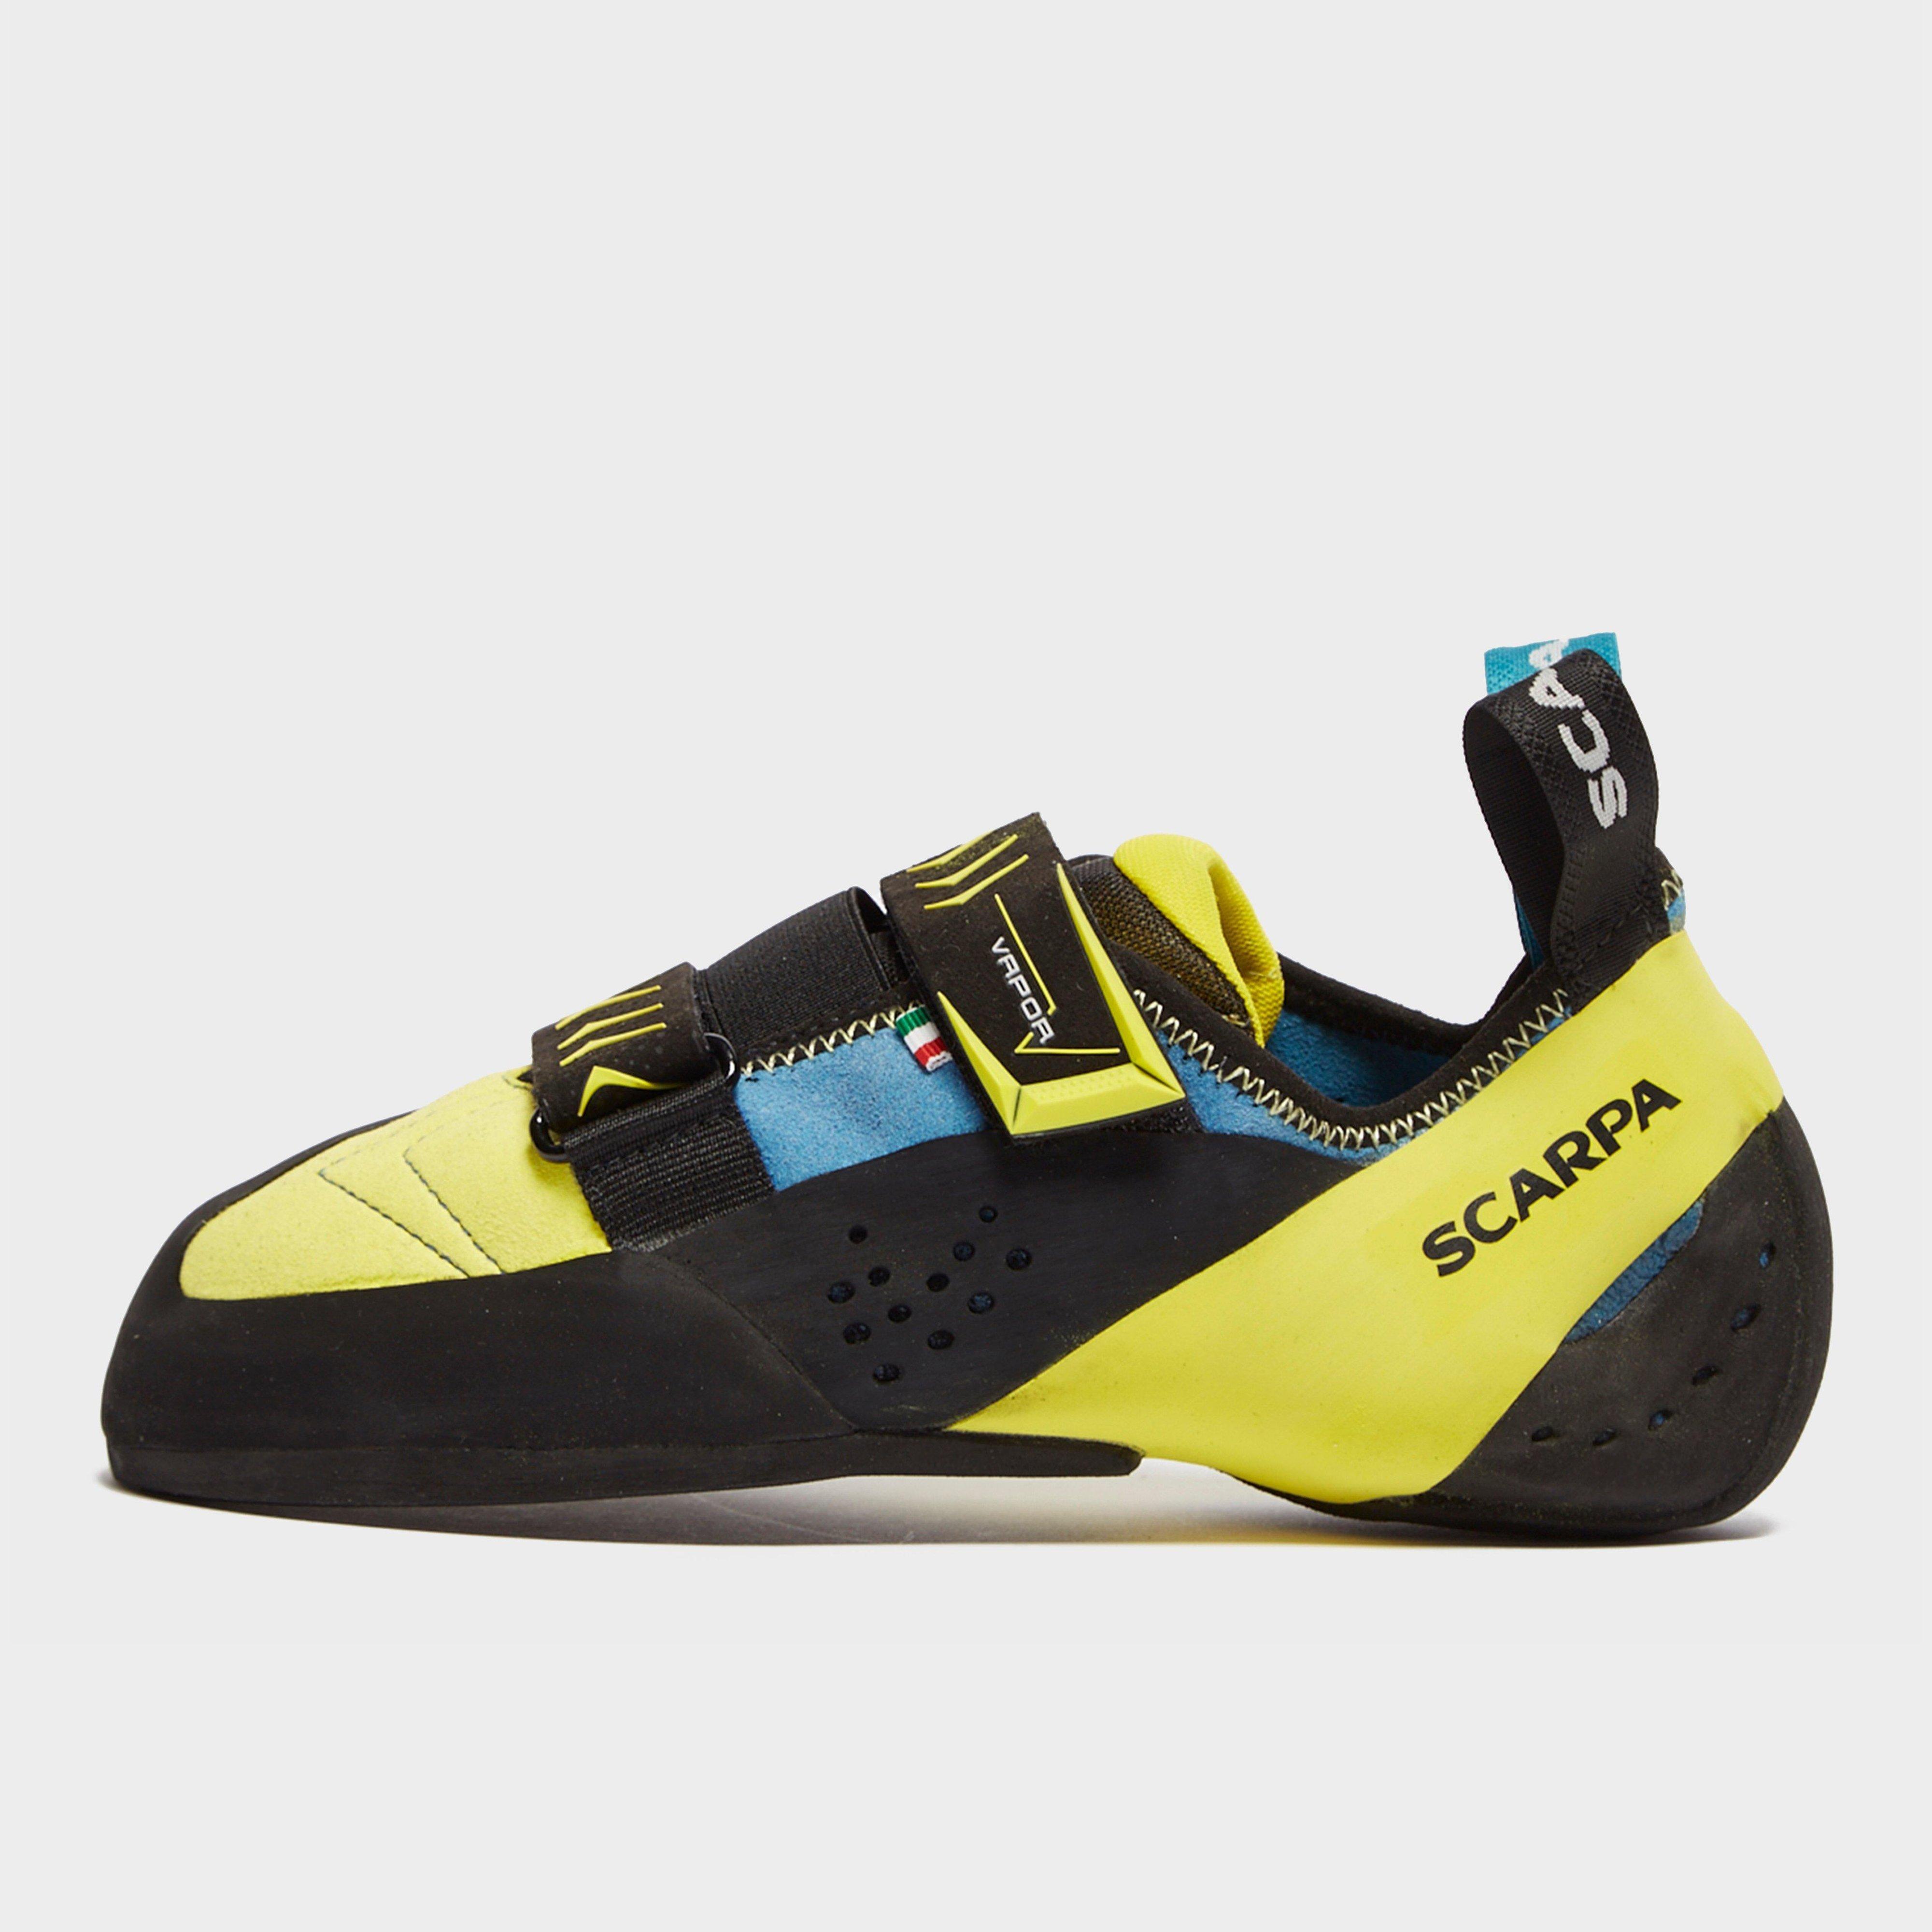 Scarpa Mens Vapour V Climbing Shoes - Yellow/velcro  Yellow/velcro